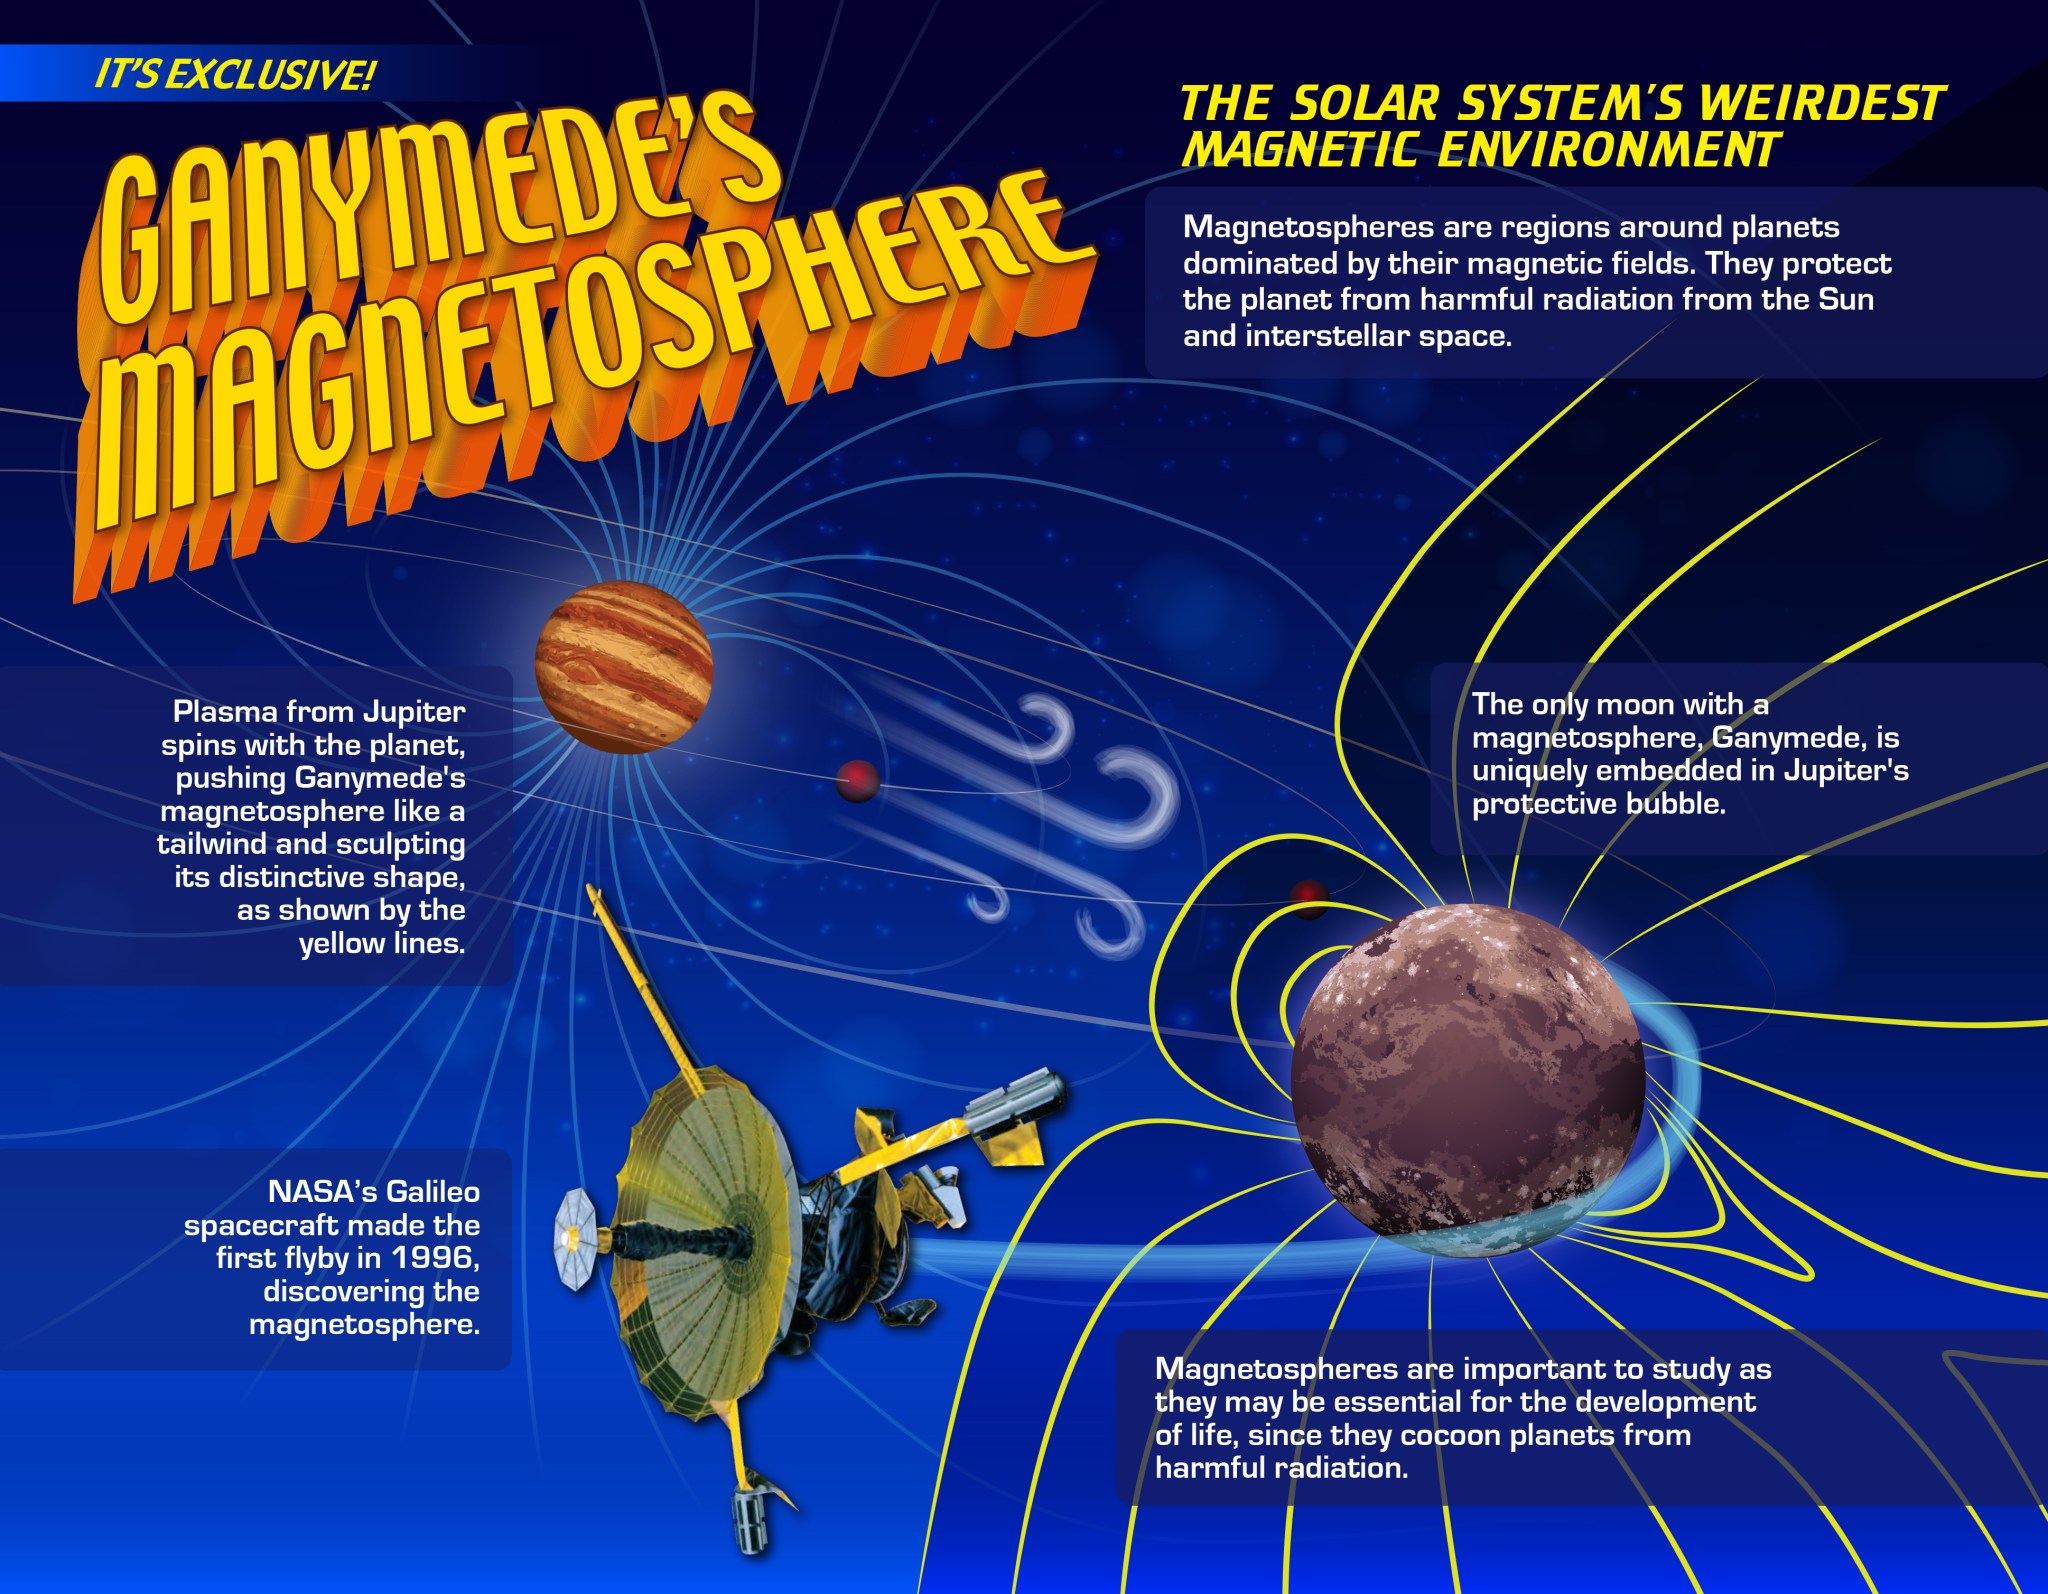 infographic describing Ganymede's magnetosphere